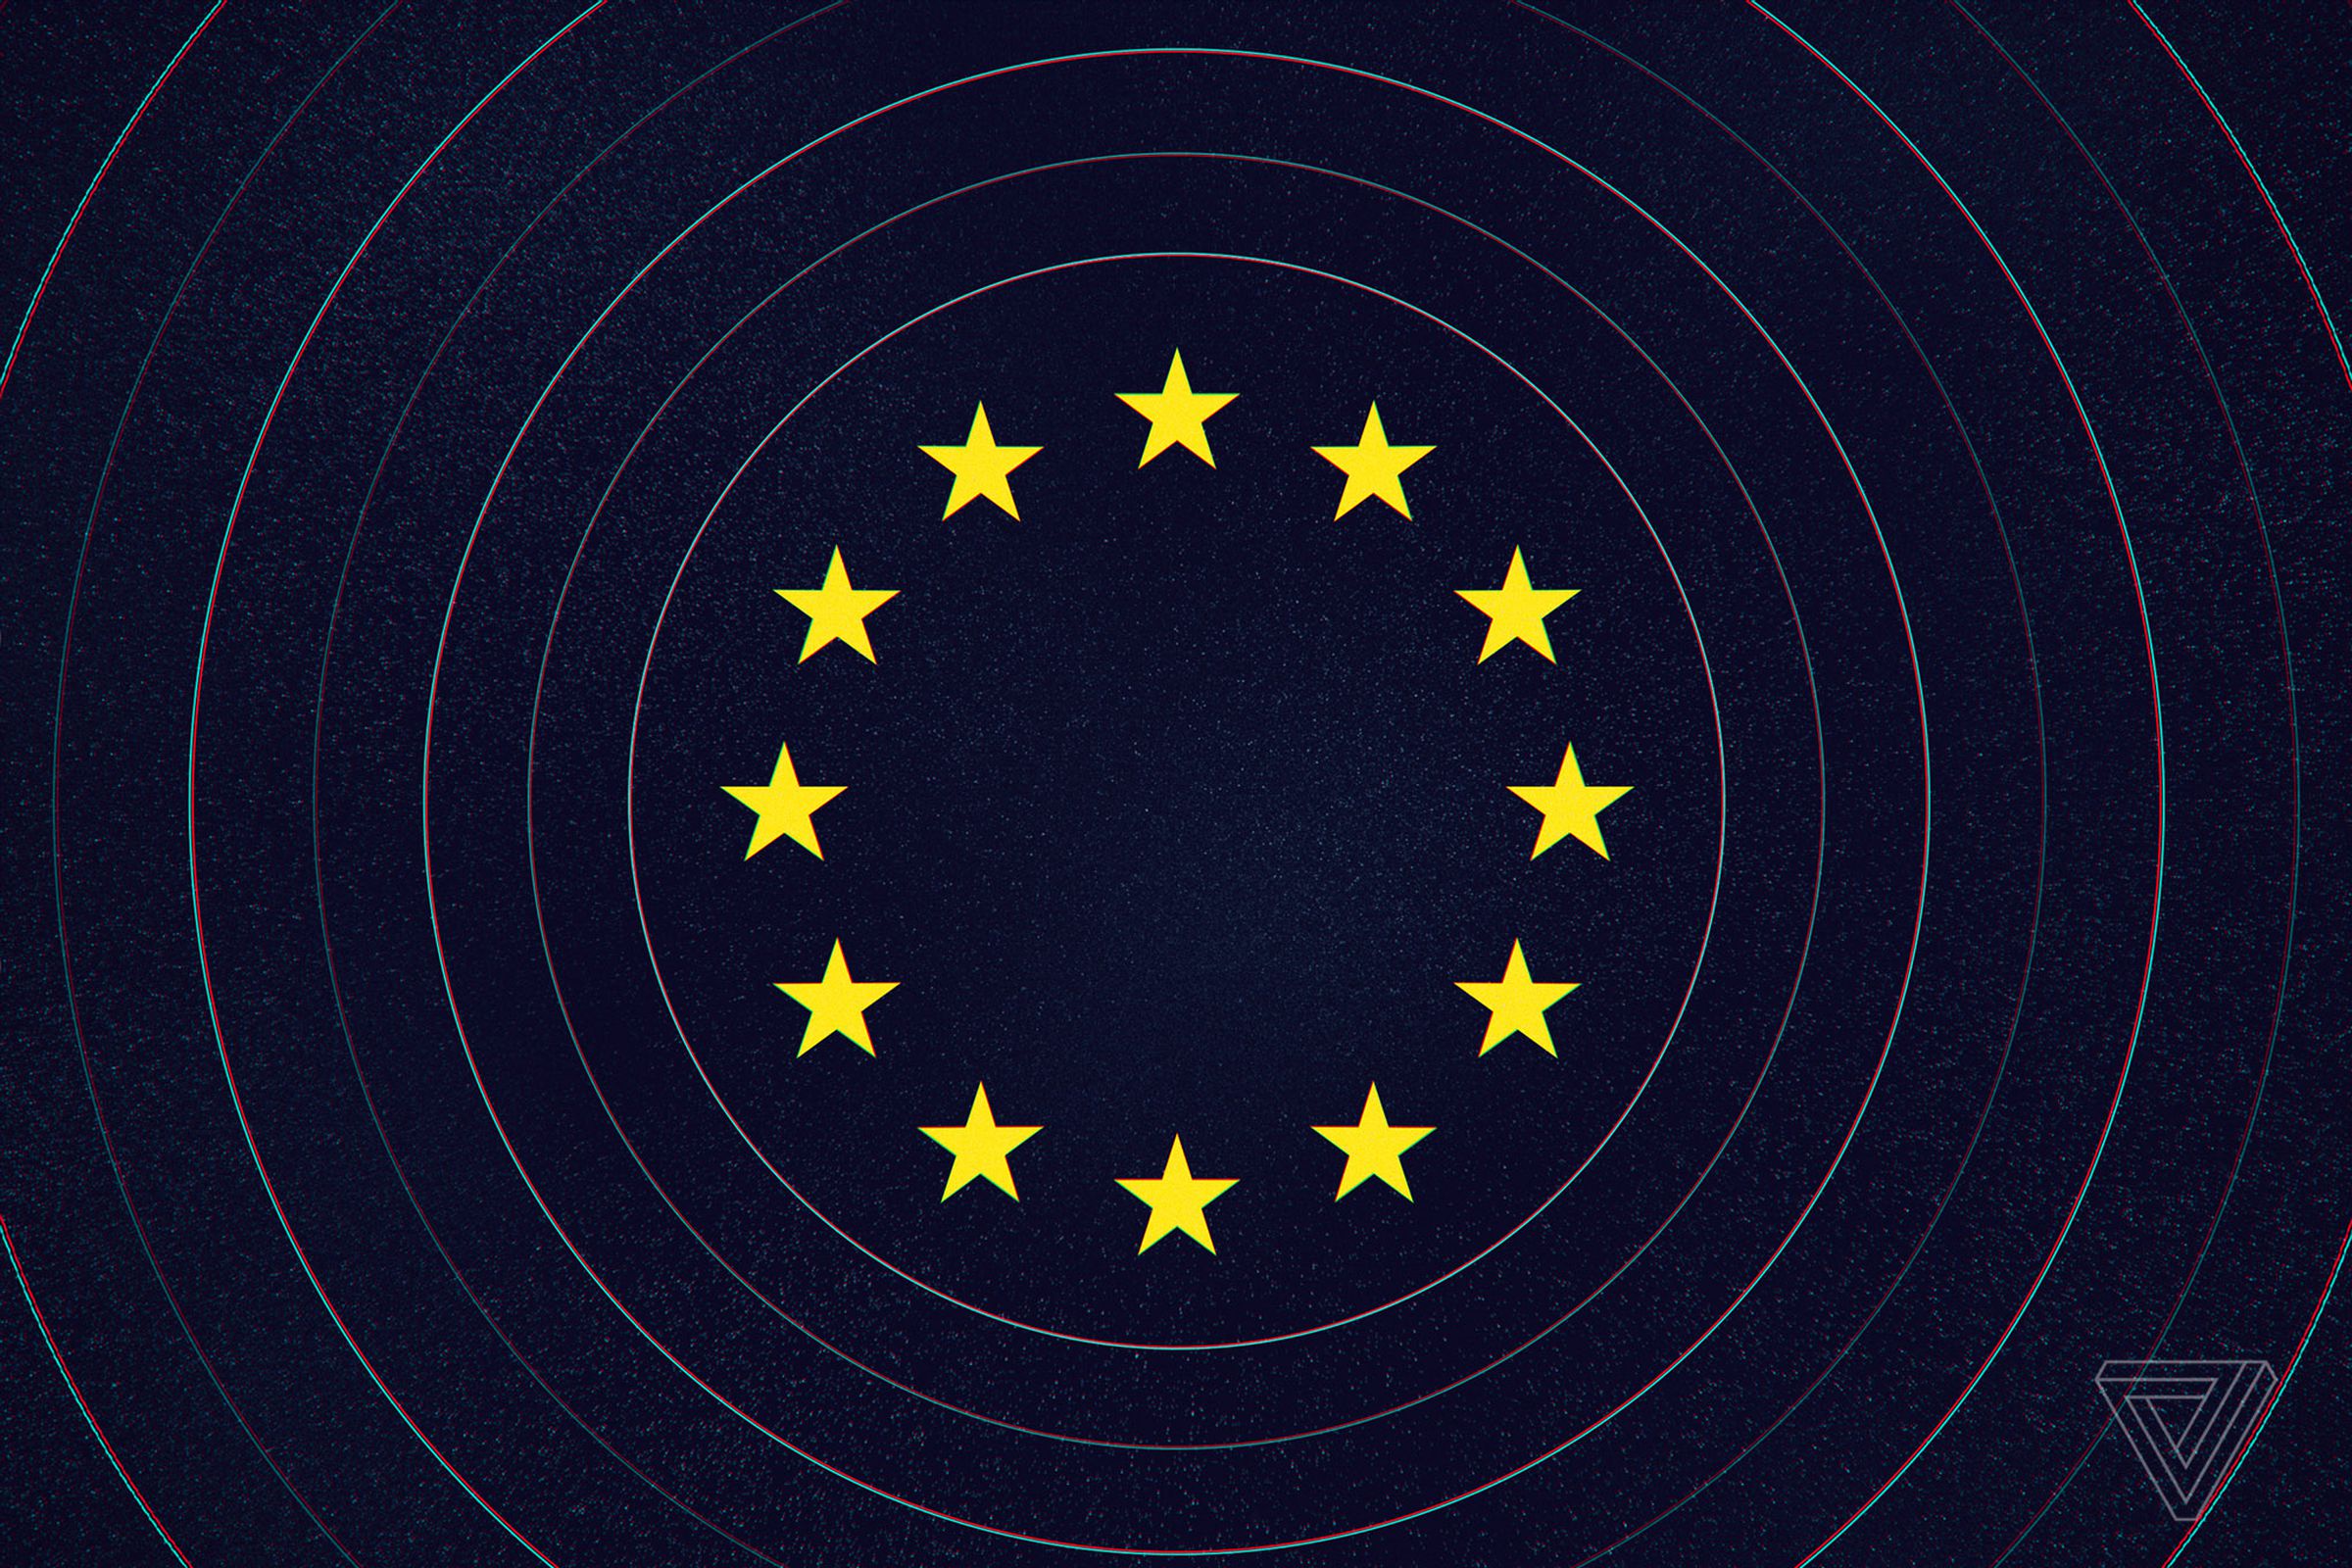 An illustration of the EU flag.